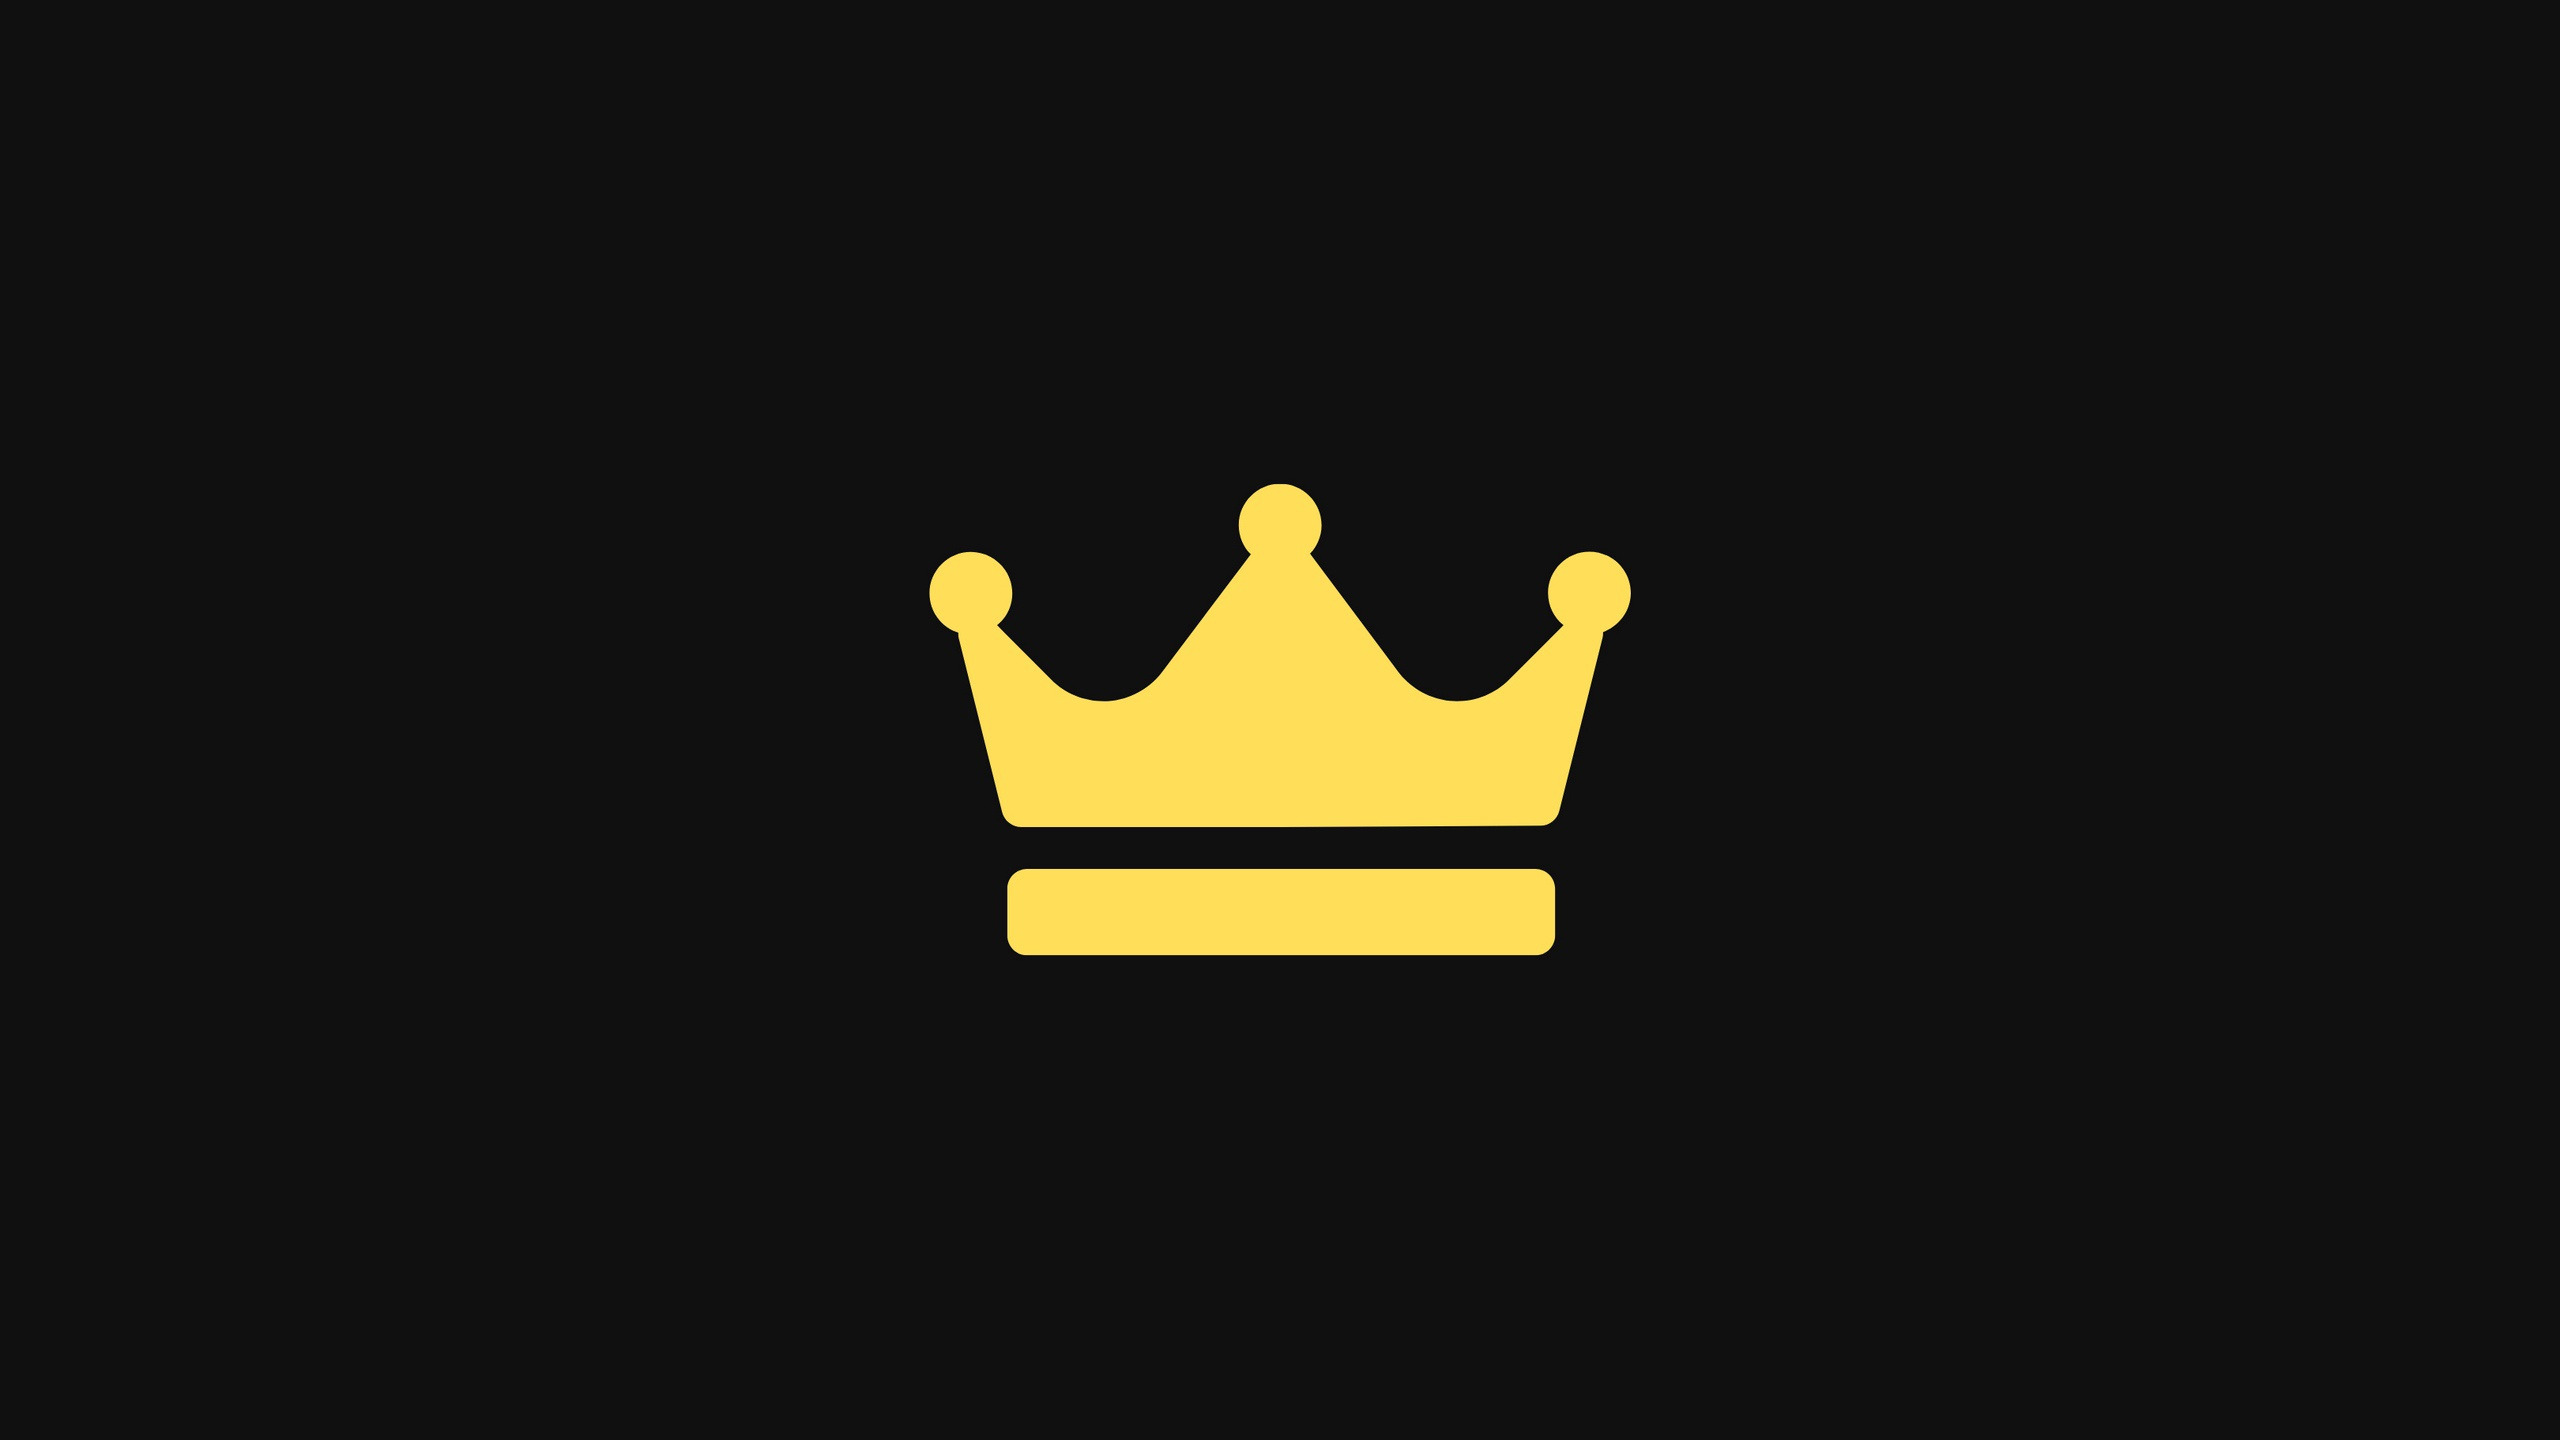 символ корона для ников пабг фото 72